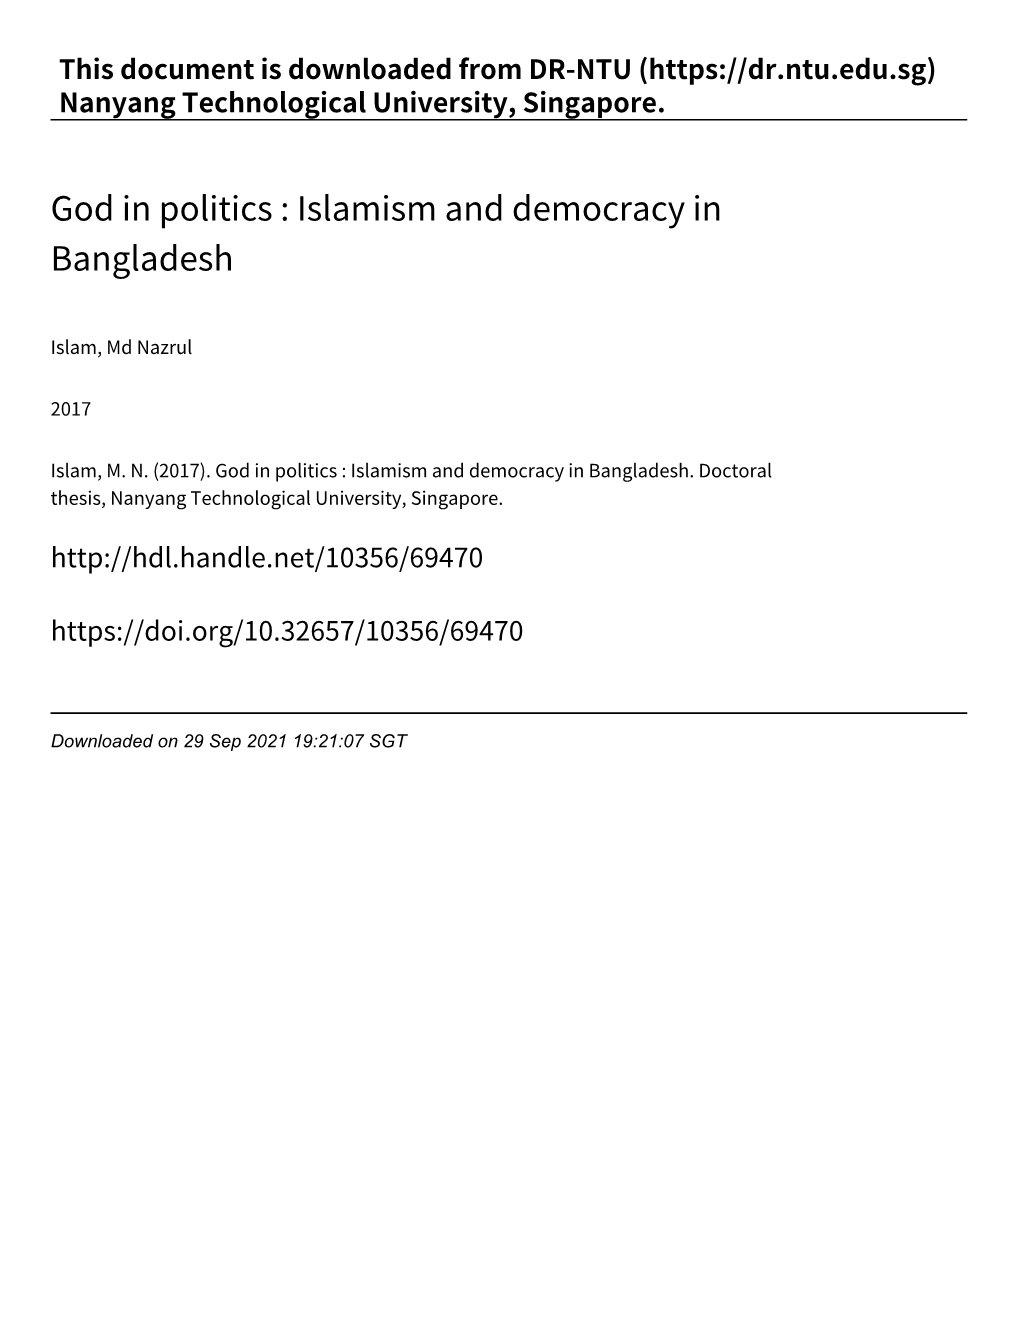 God in Politics : Islamism and Democracy in Bangladesh